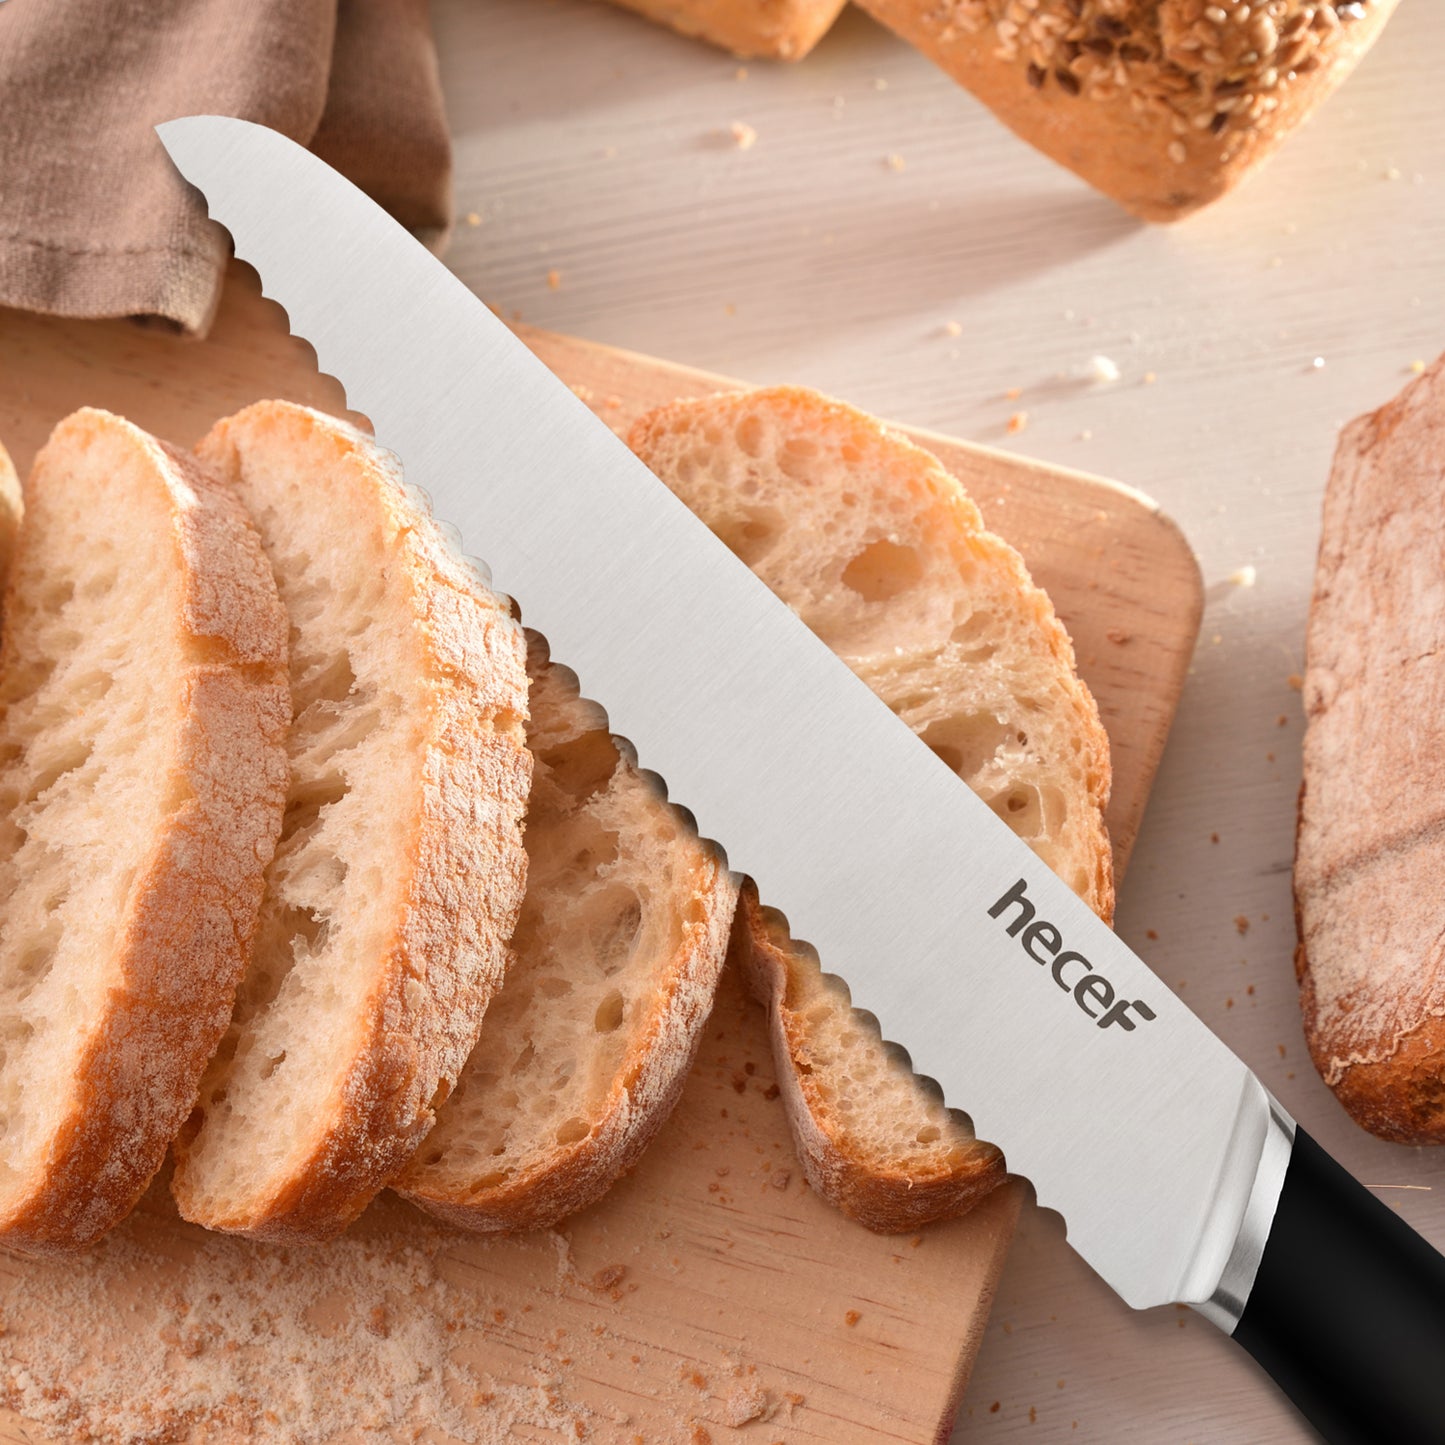 15Pcs Profession German Steel Chef Sharp Knife Set Wood Stand Kitchen Knives Scissor Storage  Cooking Chef Knife - Hecef Kitchen